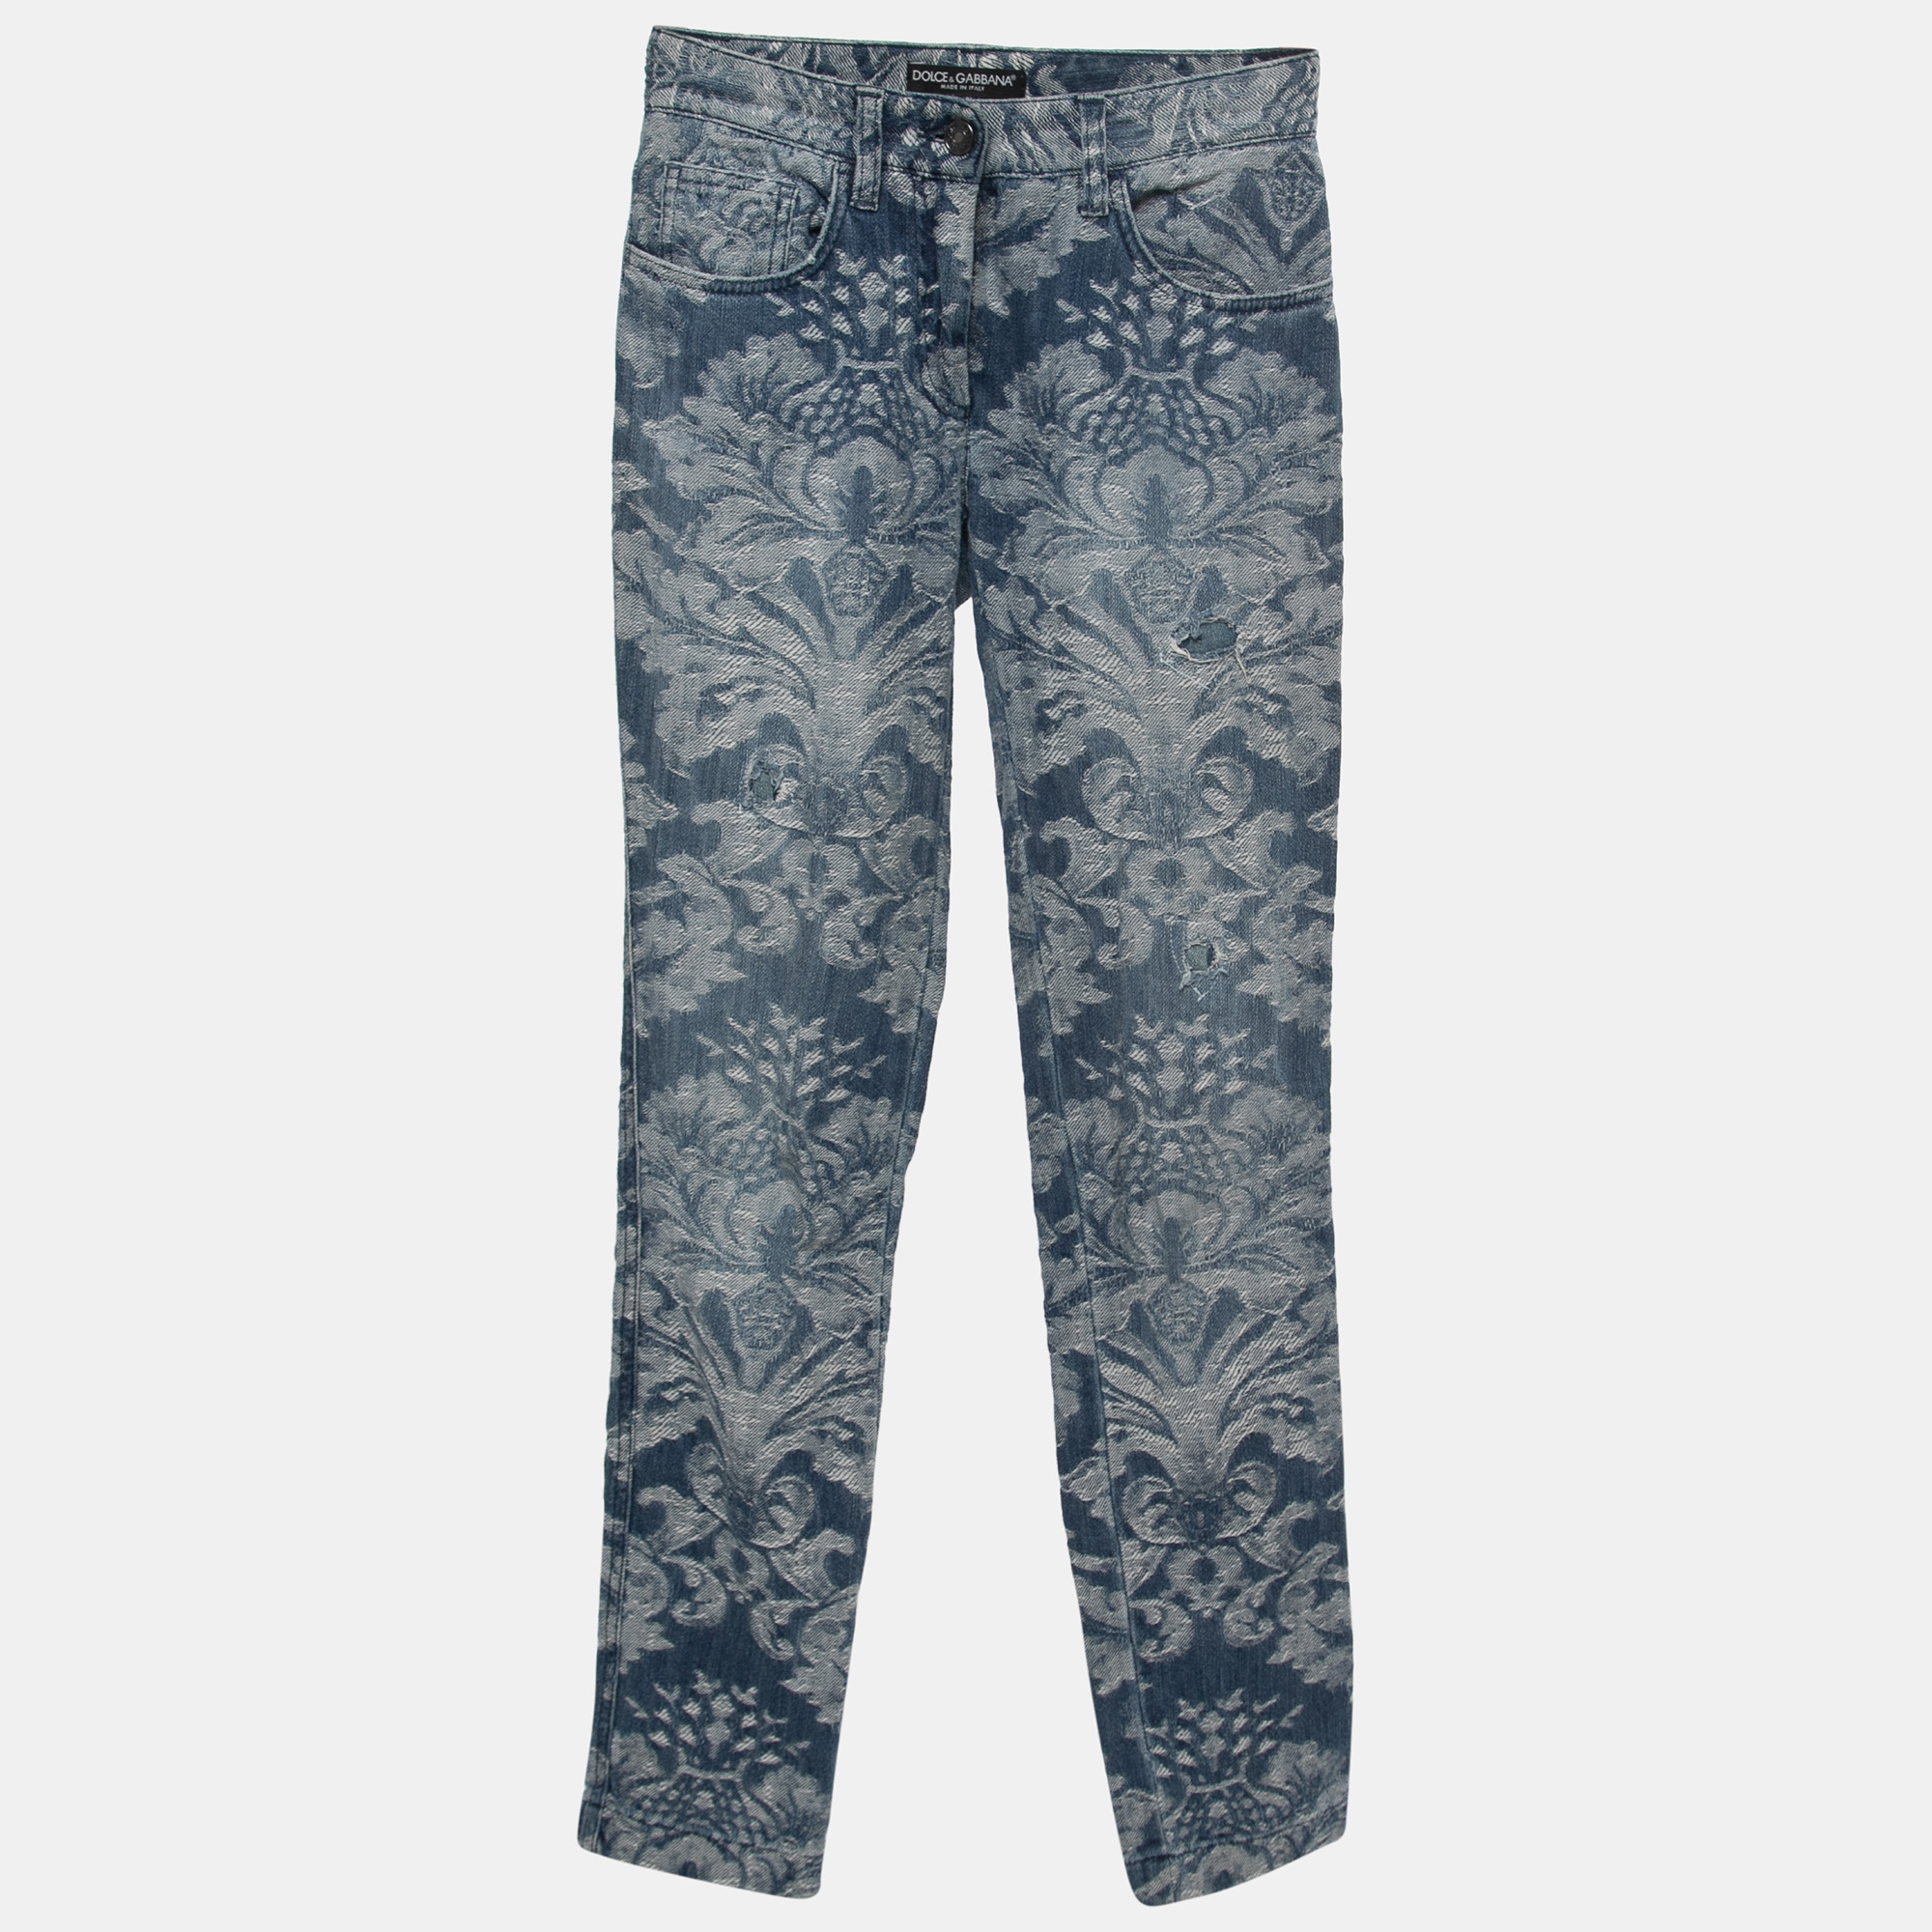 Dolce & gabbana blue jacquard denim jeans xs waist 24"